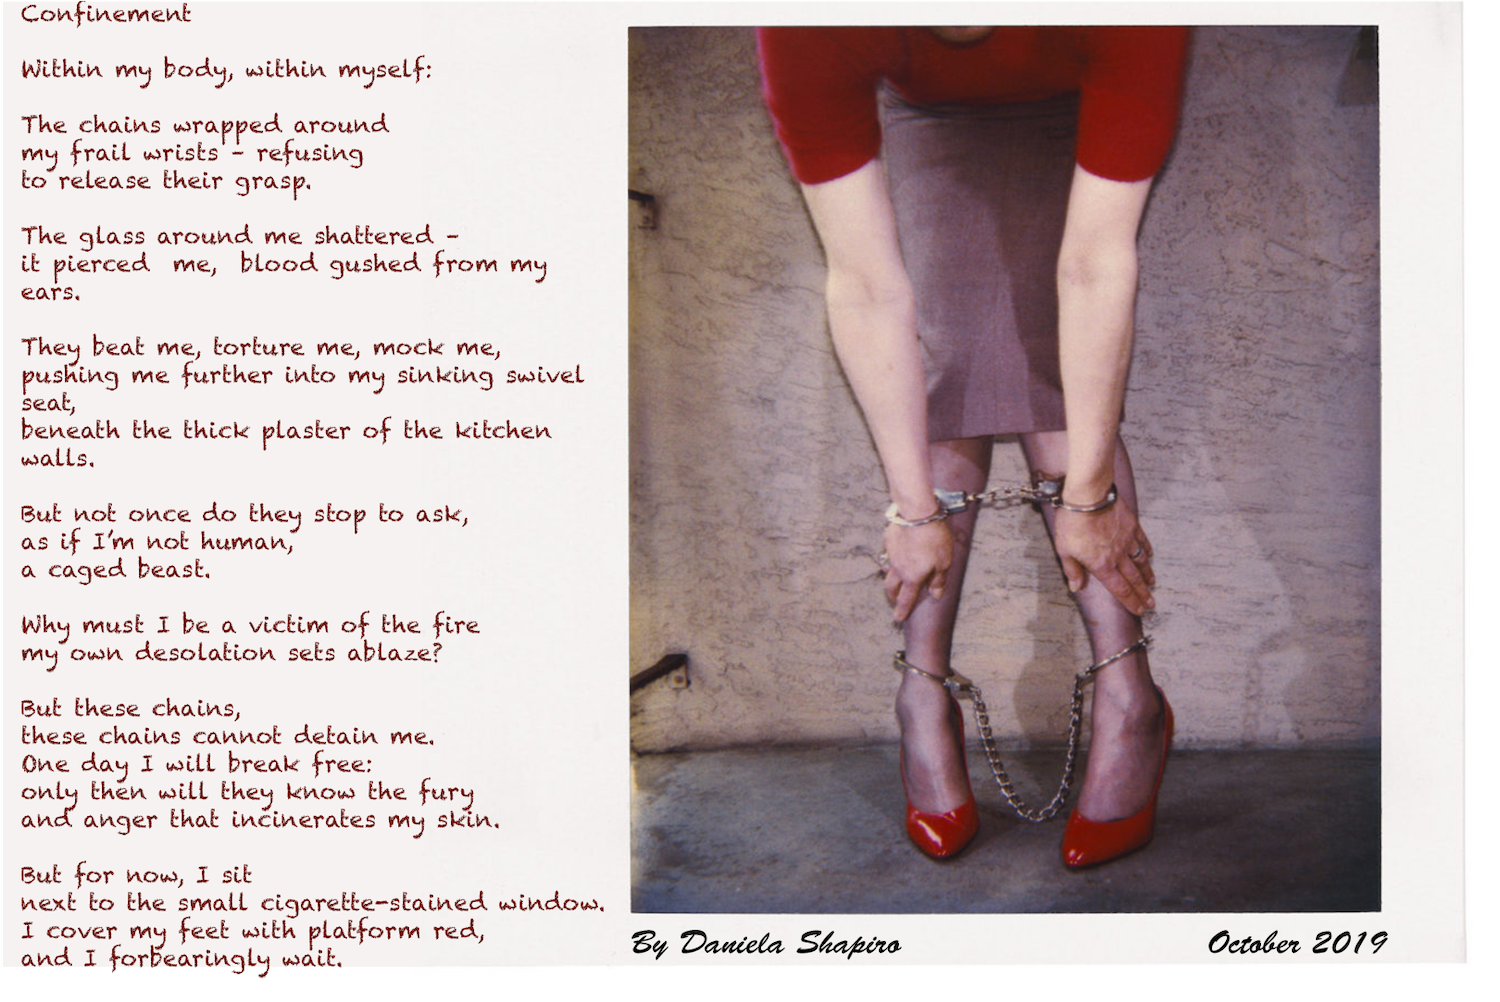 Poem by Daniela Shapiro: Confinemet